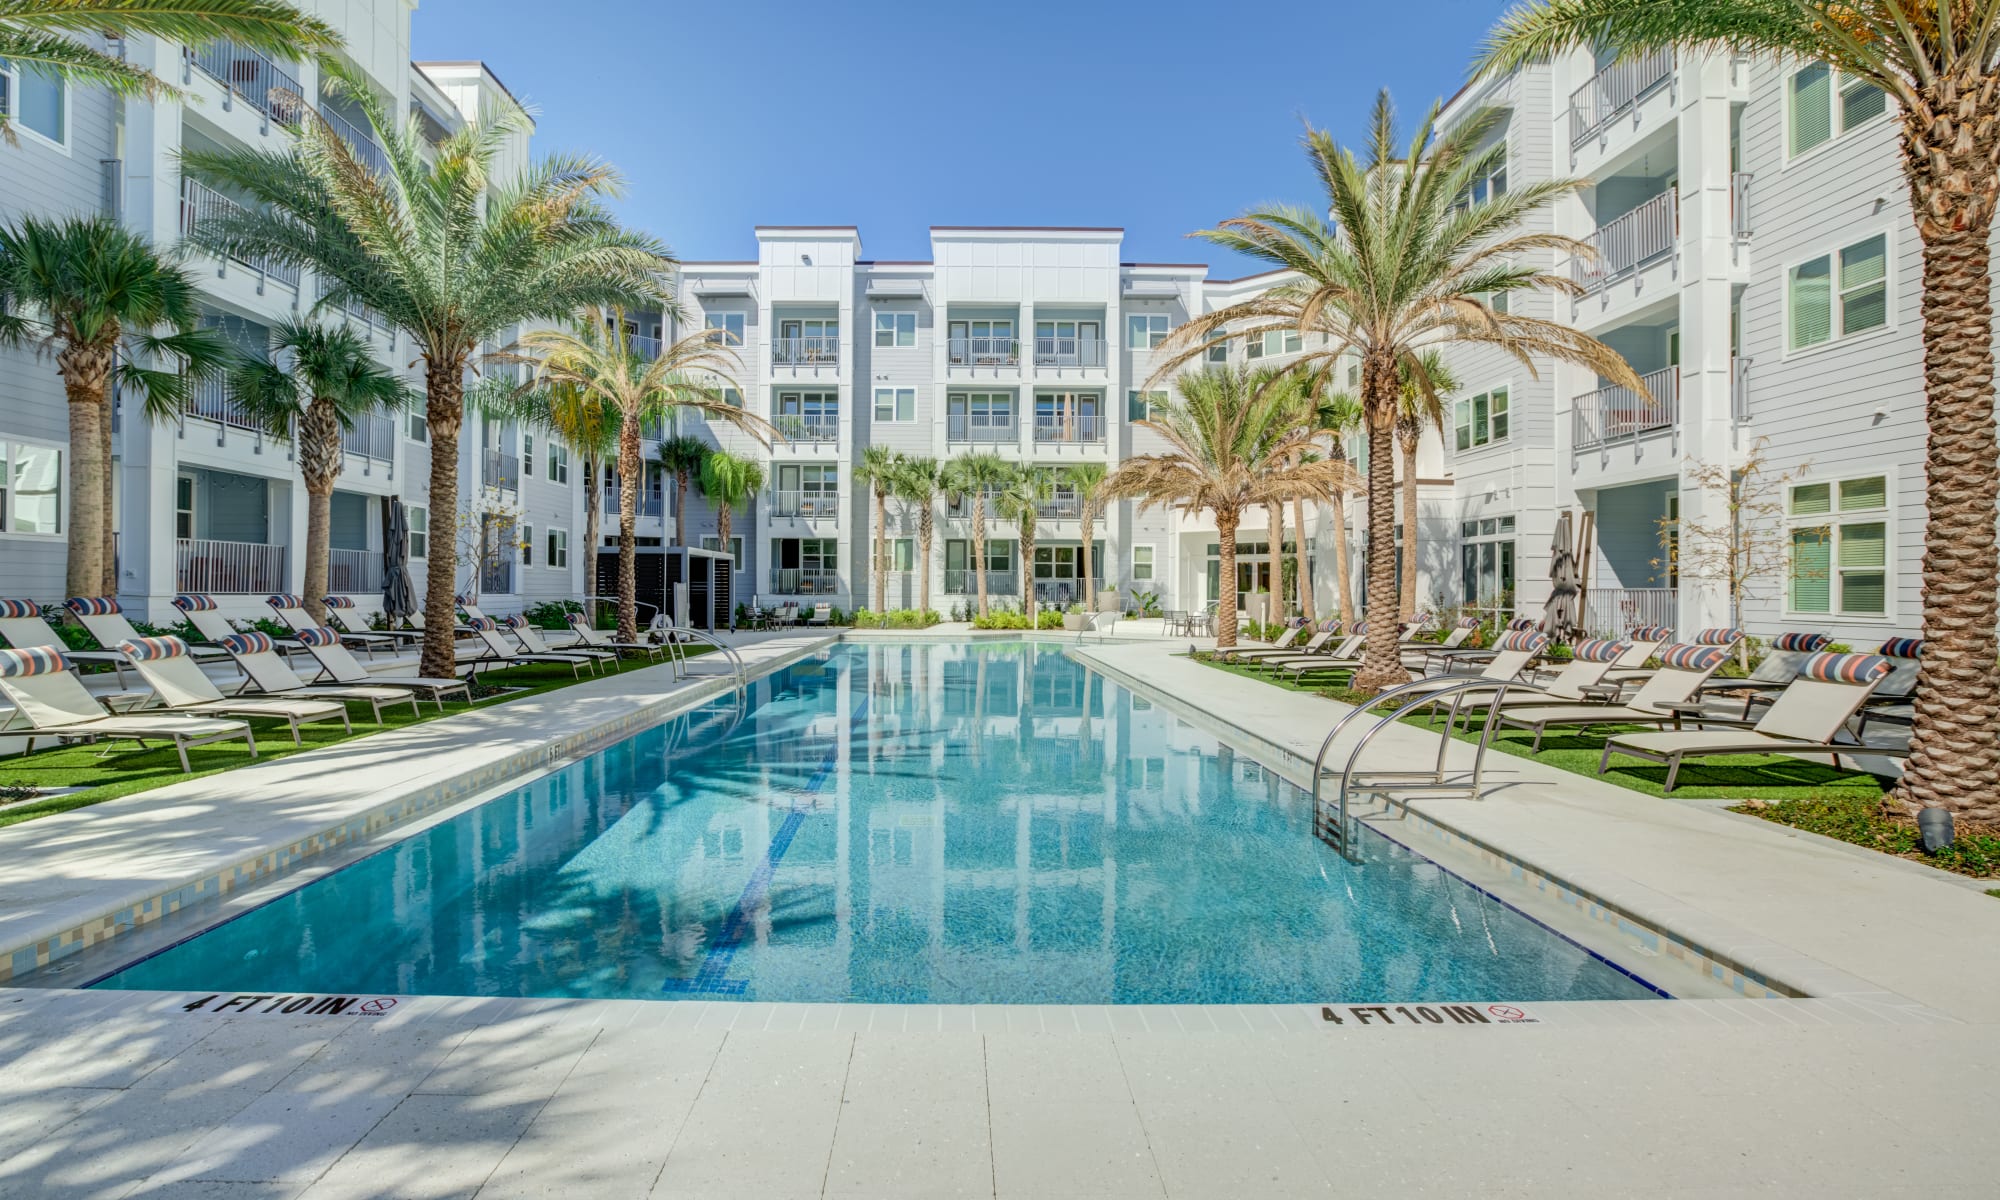 Apartments at Viridian Reserve in Sanford, Florida